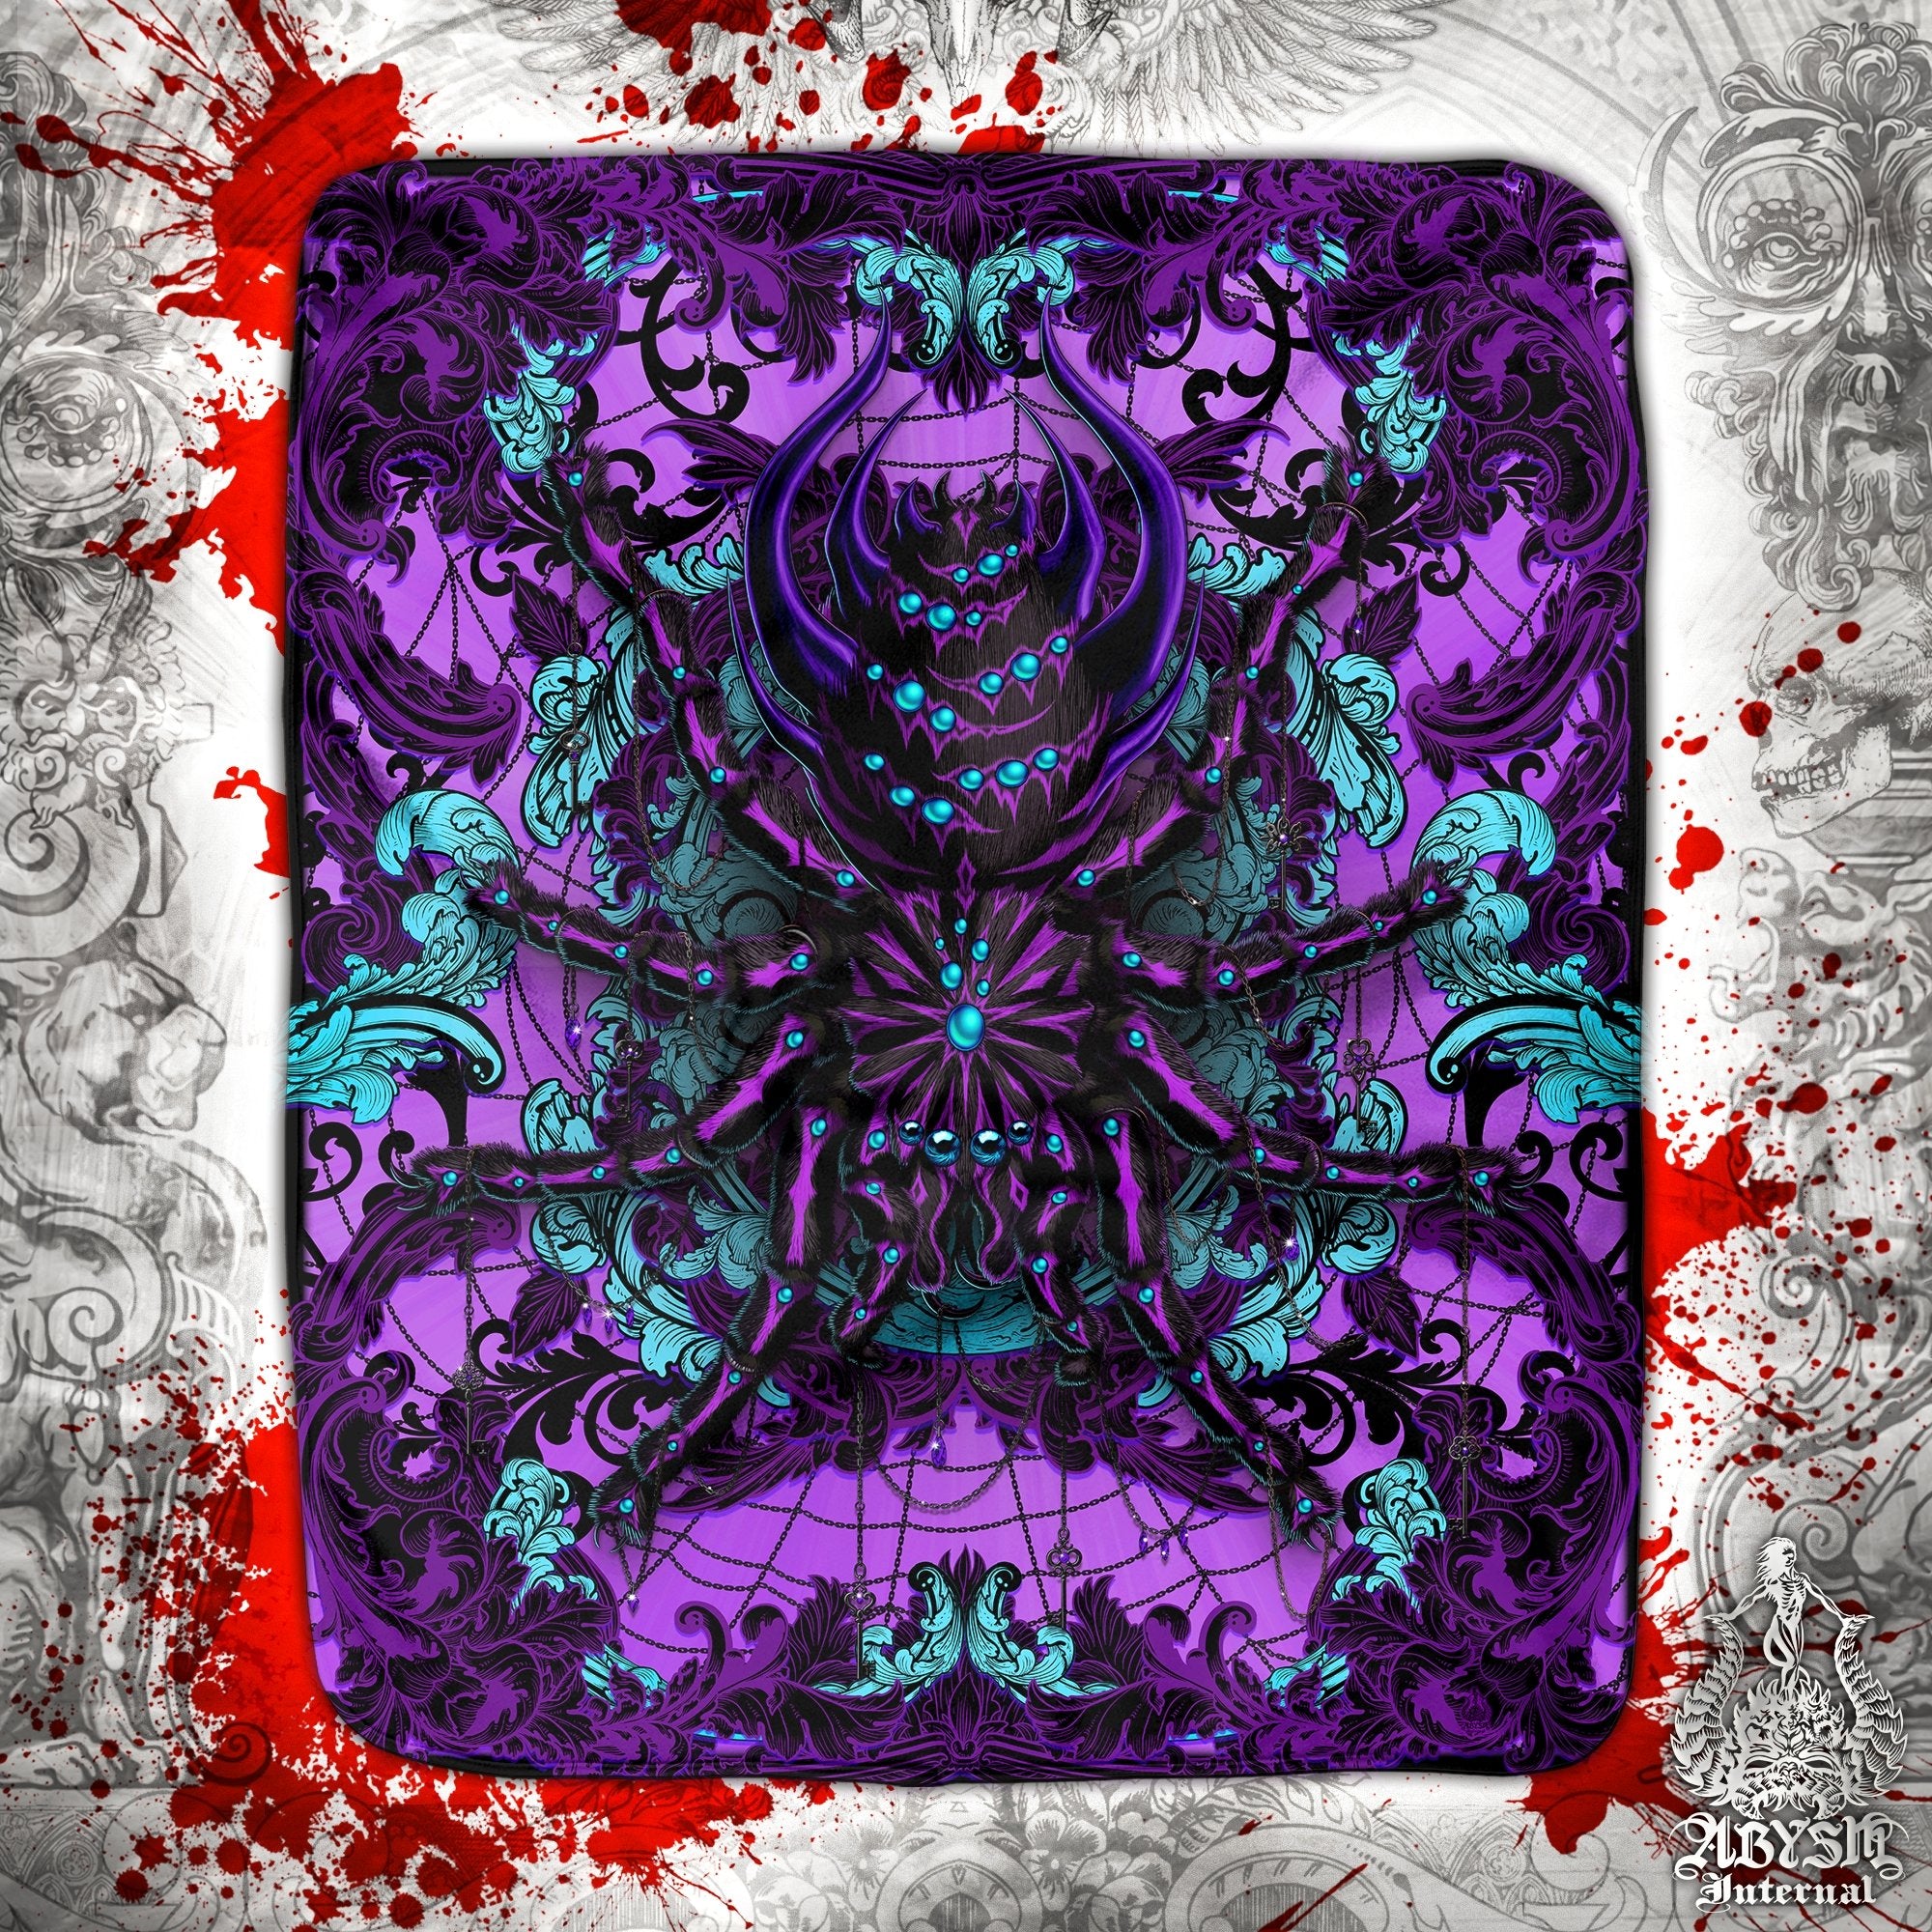 Pastel Goth Throw Fleece Blanket, Gothic Home Decor, Halloween Gift, Alternative Art Gift - Spider, Black and Purple, Tarantula Art - Abysm Internal